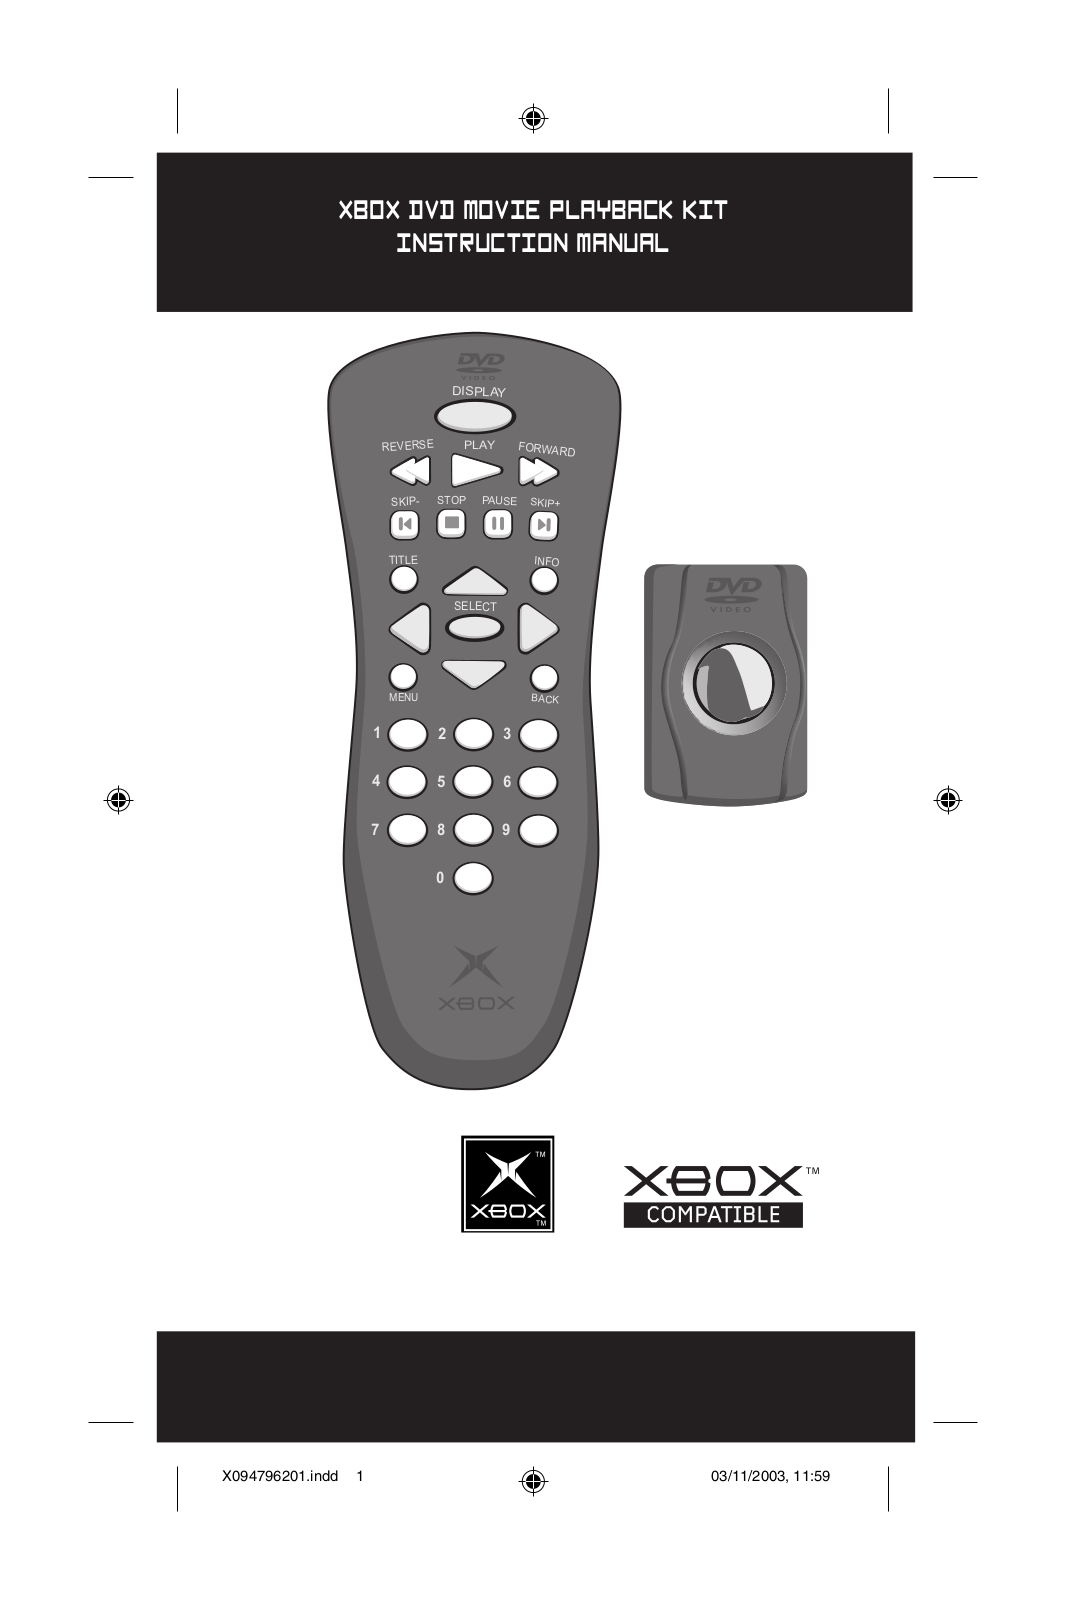 Microsoft XBOX-DVD MOVIE PLAYBACK User Manual